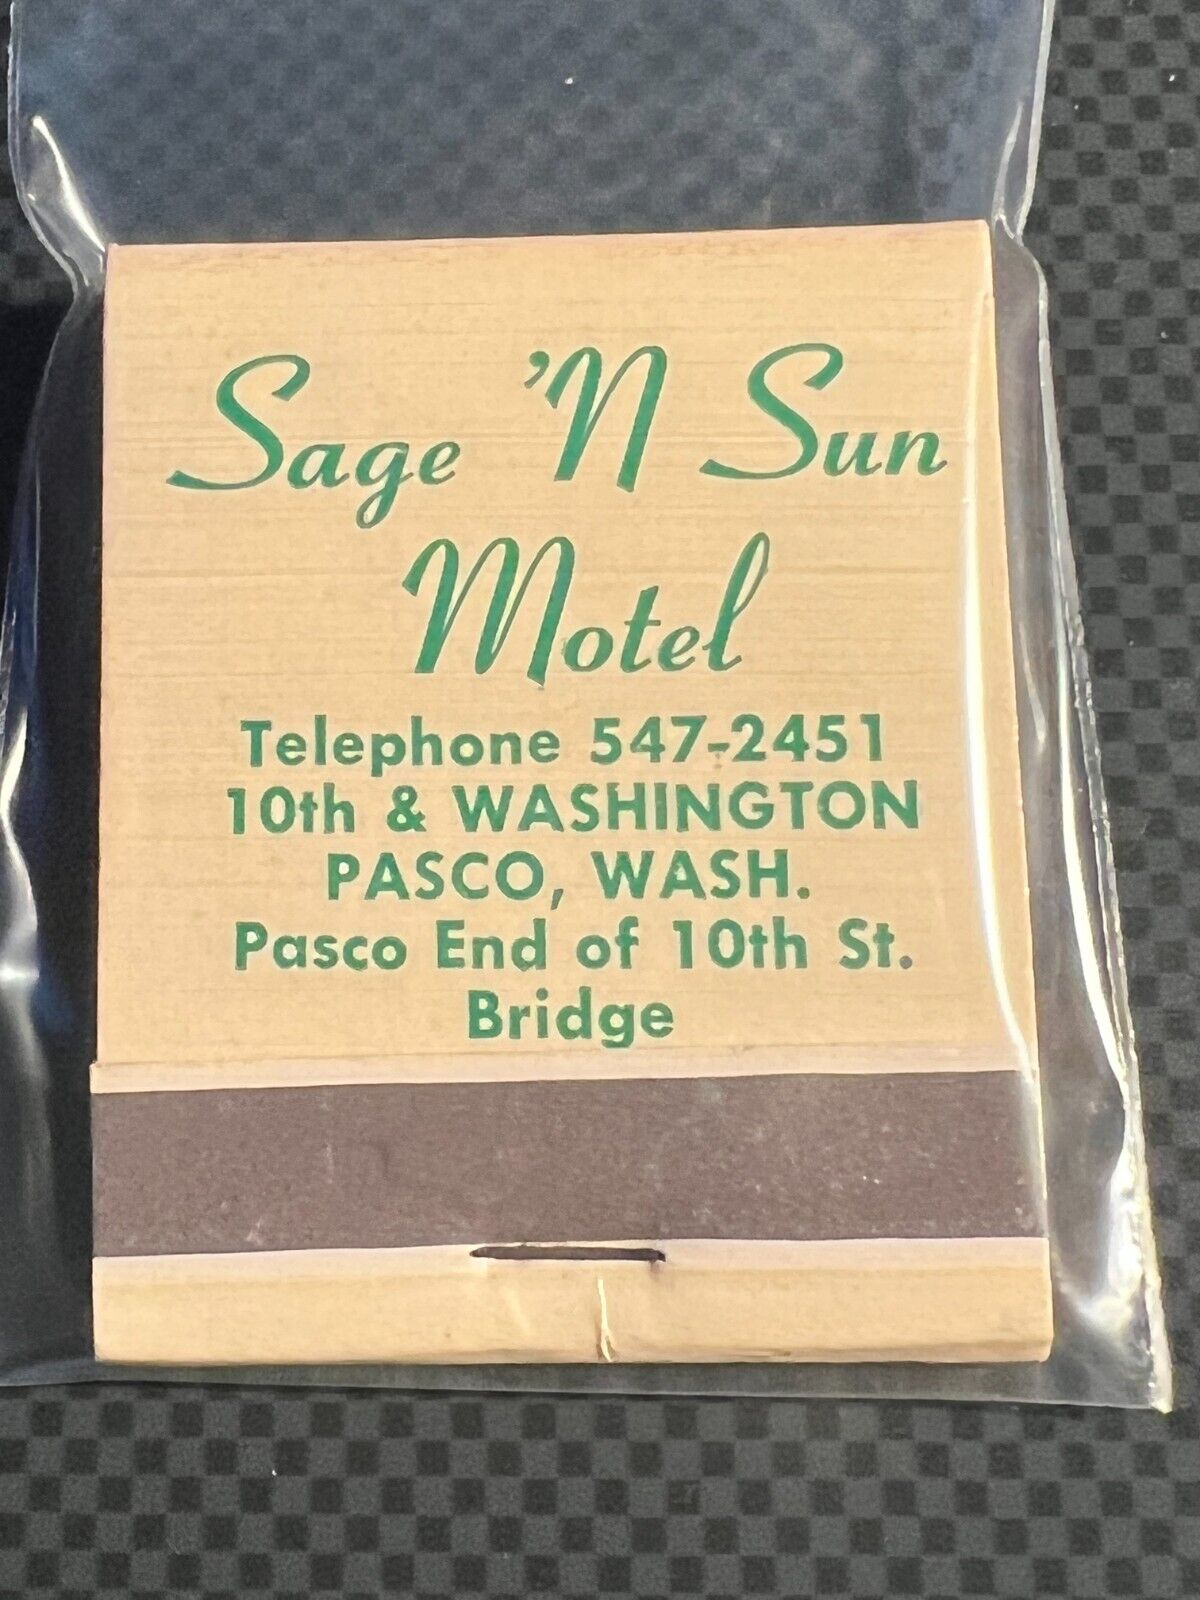 VINTAGE MATCHBOOK - SAGE \'N SUN MOTEL - PASCO, WASHINGTON - UNSTRUCK BEAUTY